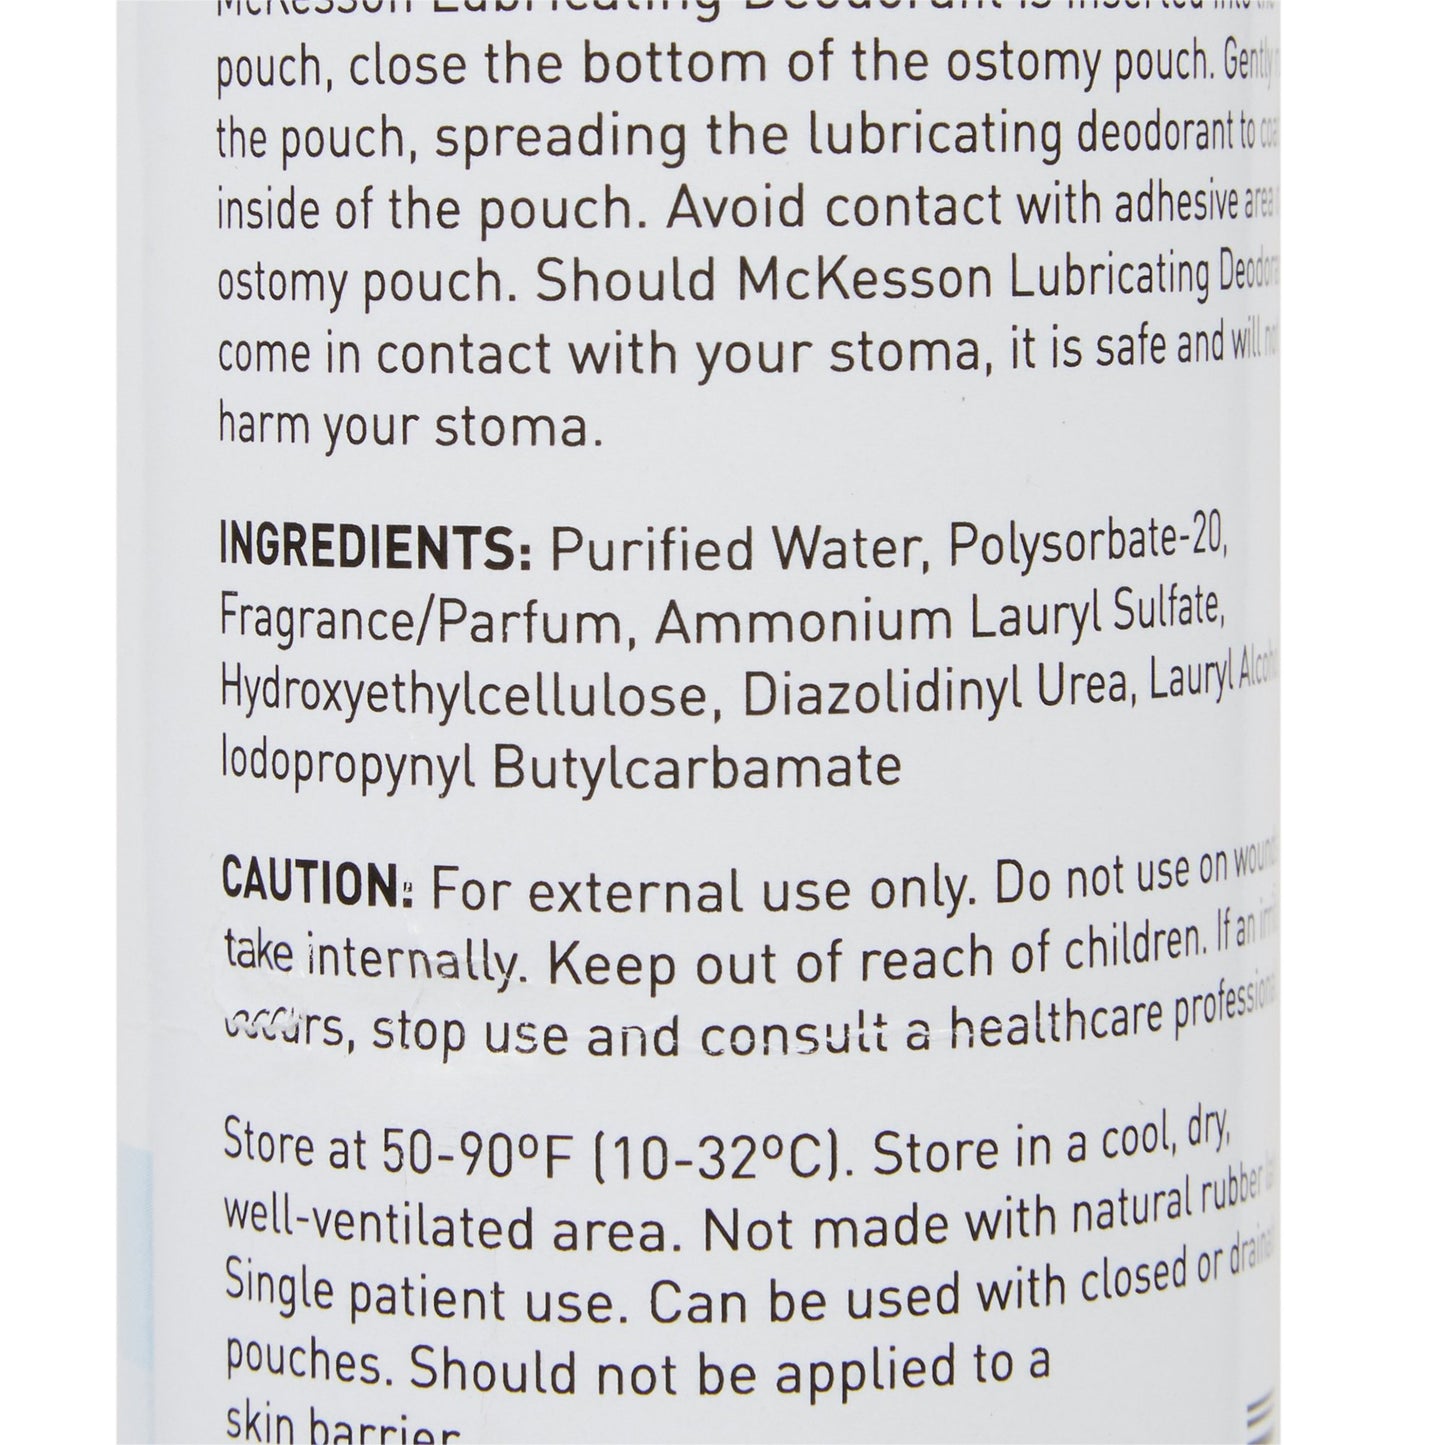 McKesson Lubricating Ostomy Appliance Deodorant Bottle, 6 ct